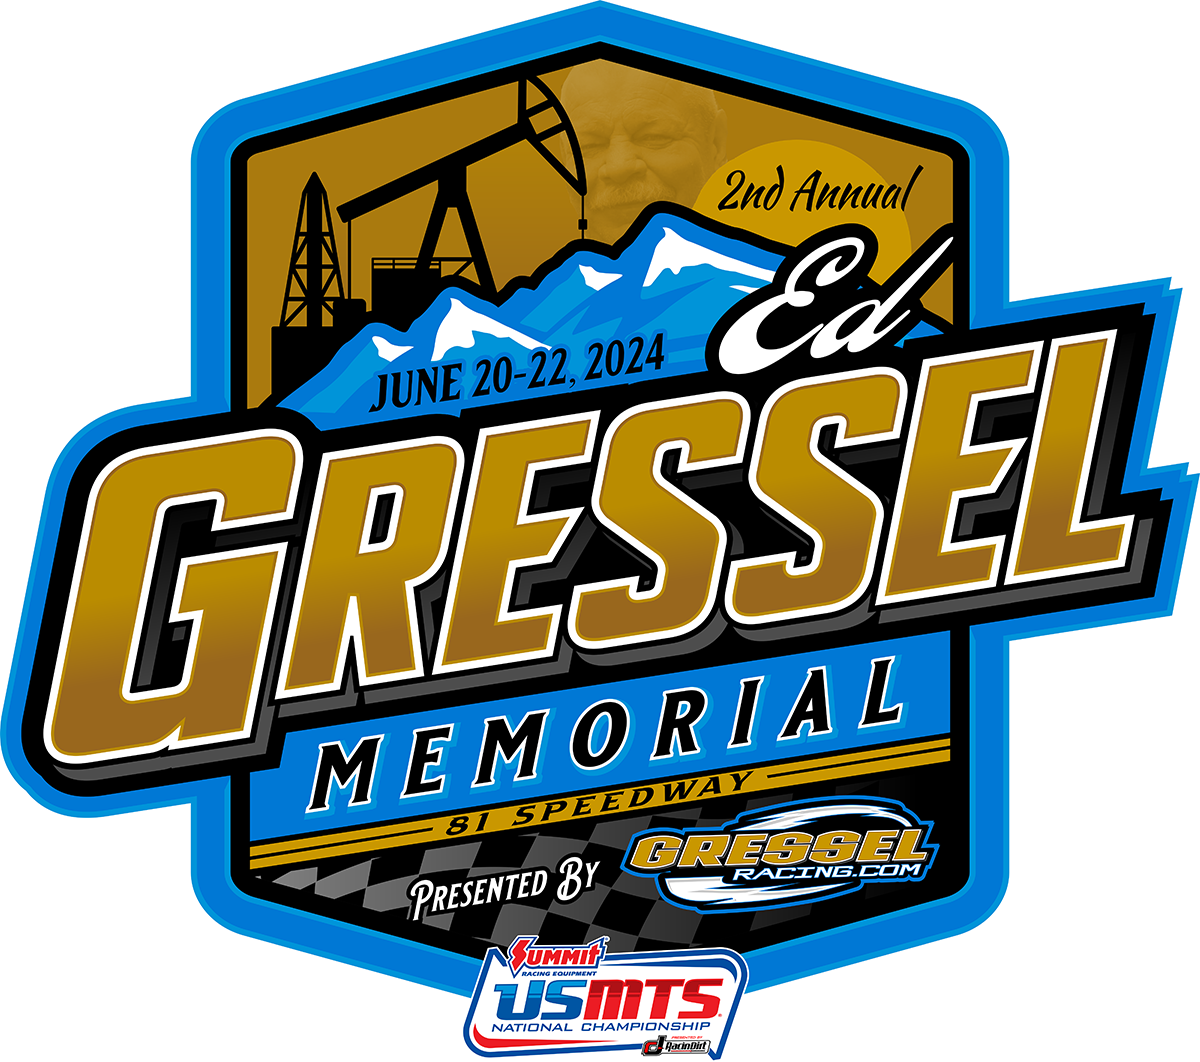 2nd Annual USMTS Ed Gressel Memorial